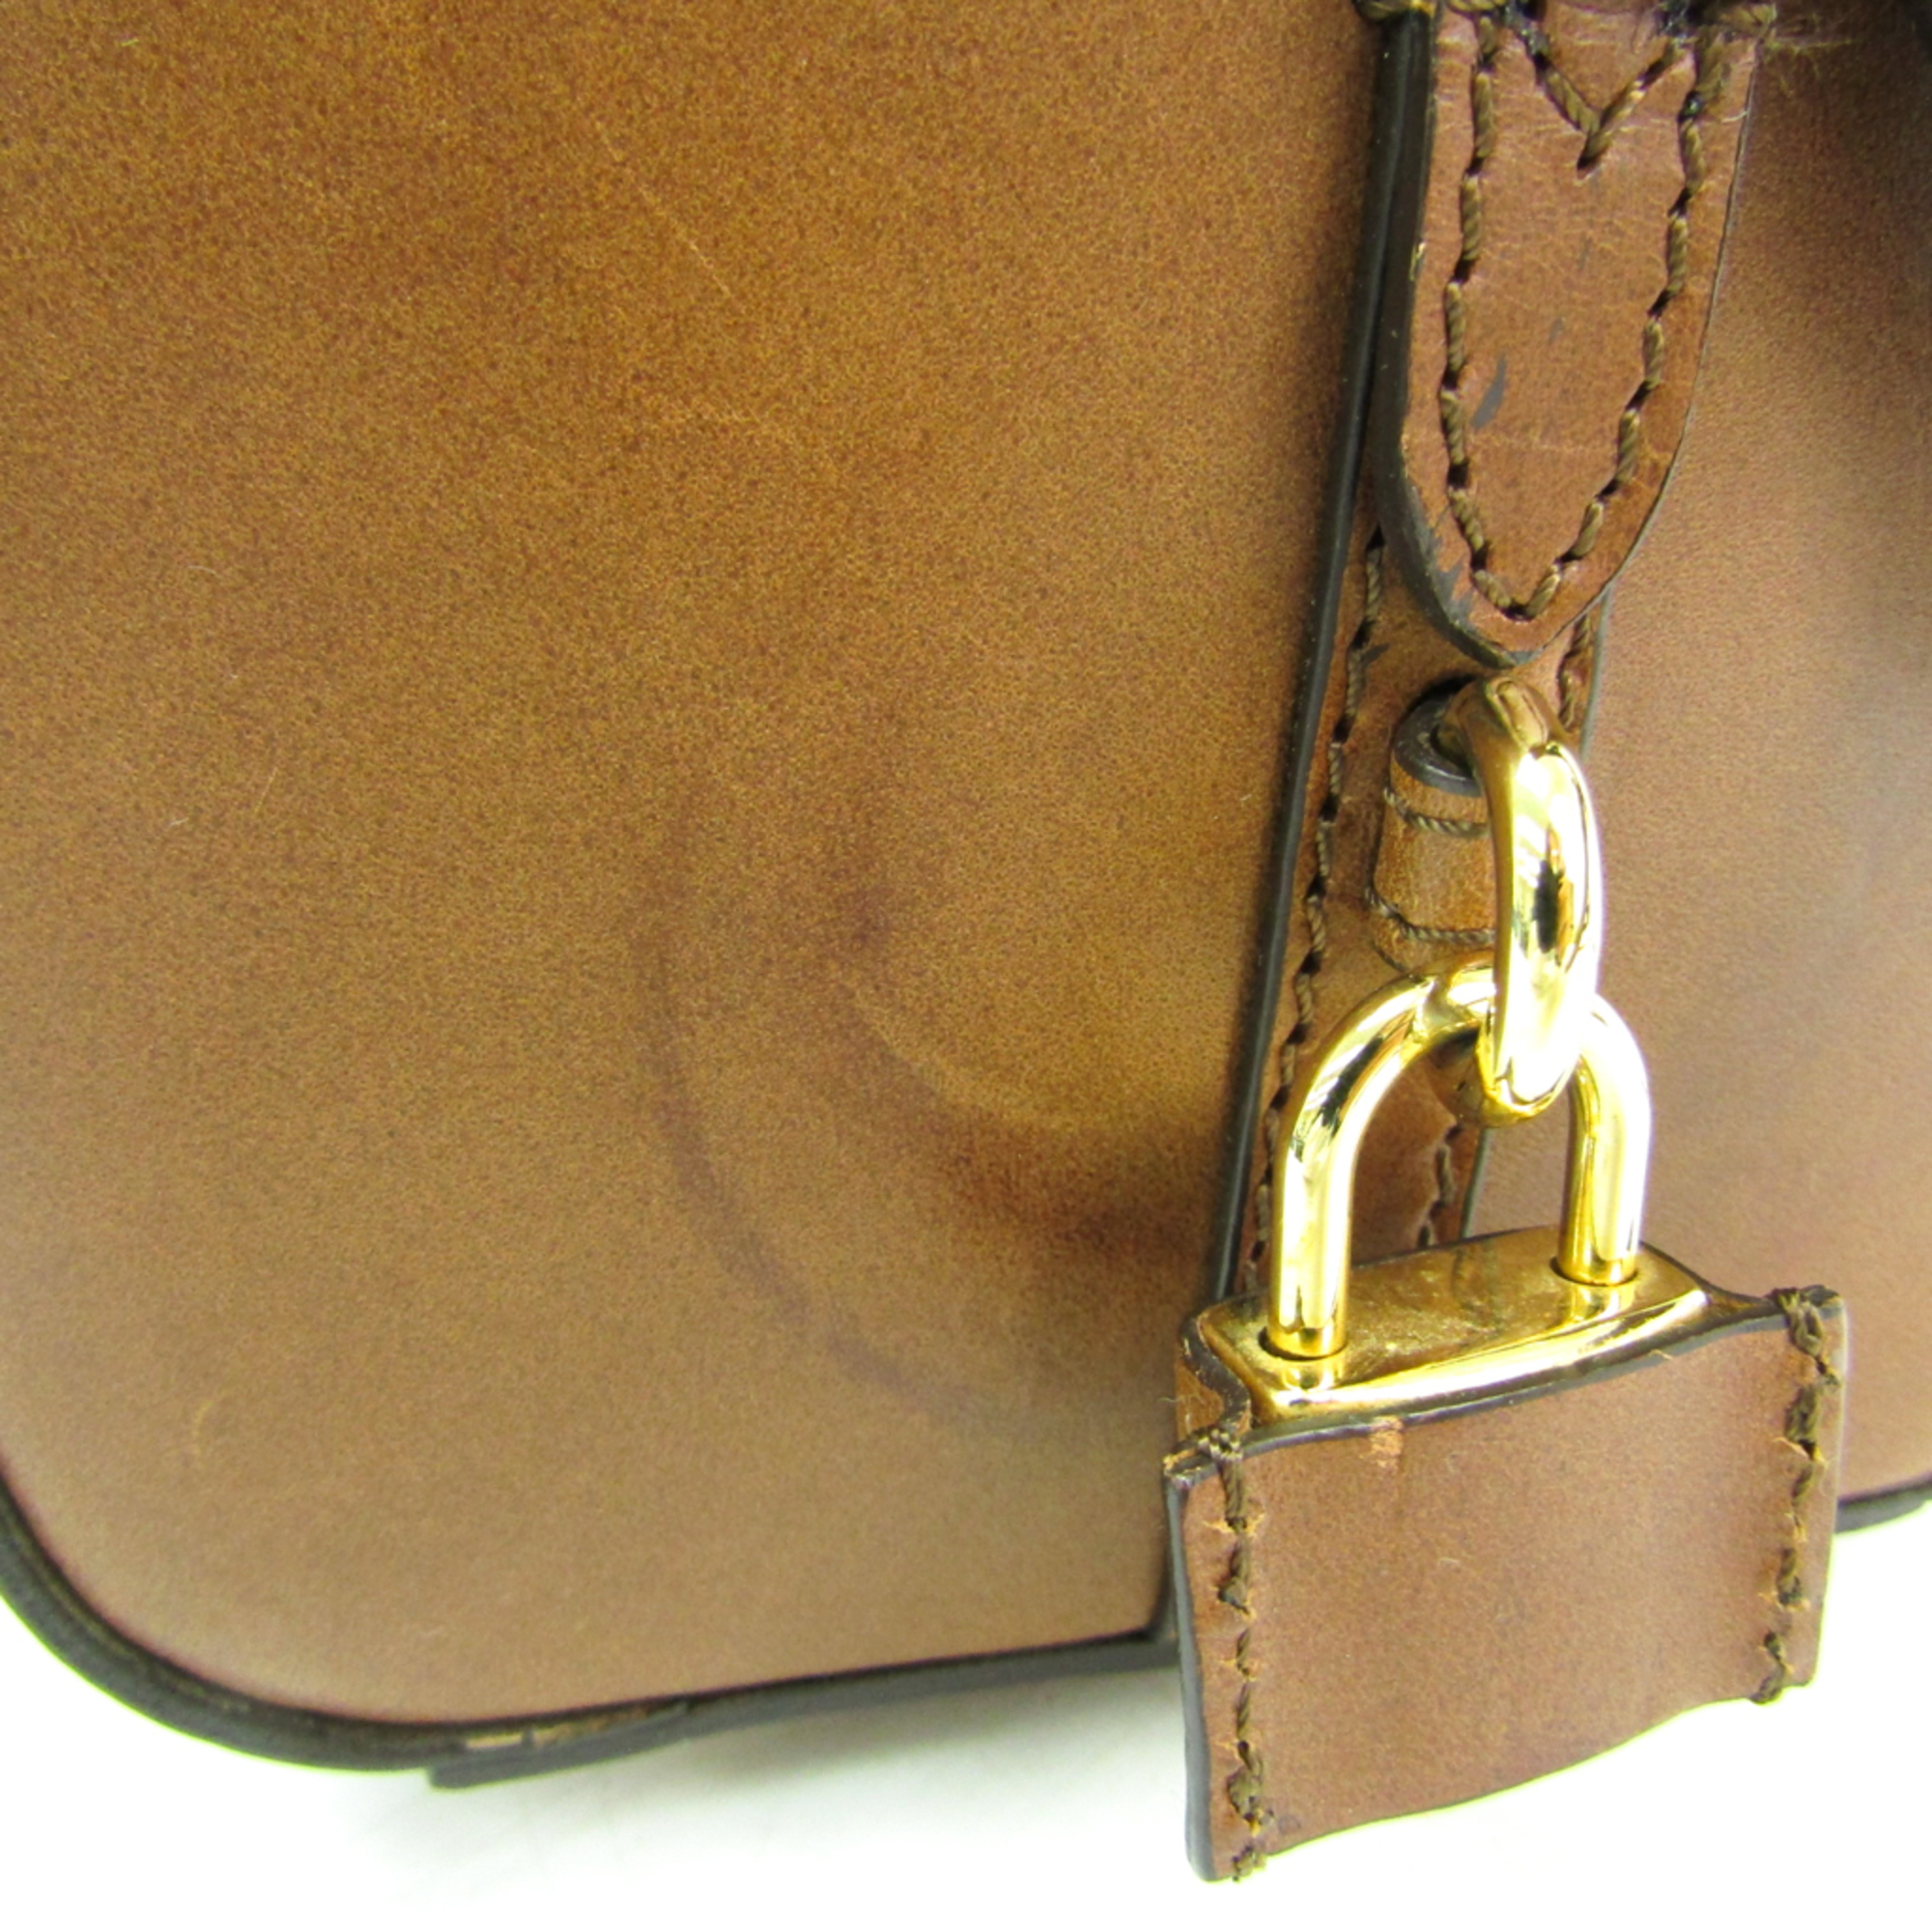 Burberry 3908584 Women's Leather Boston Bag,Handbag,Shoulder Bag Brown